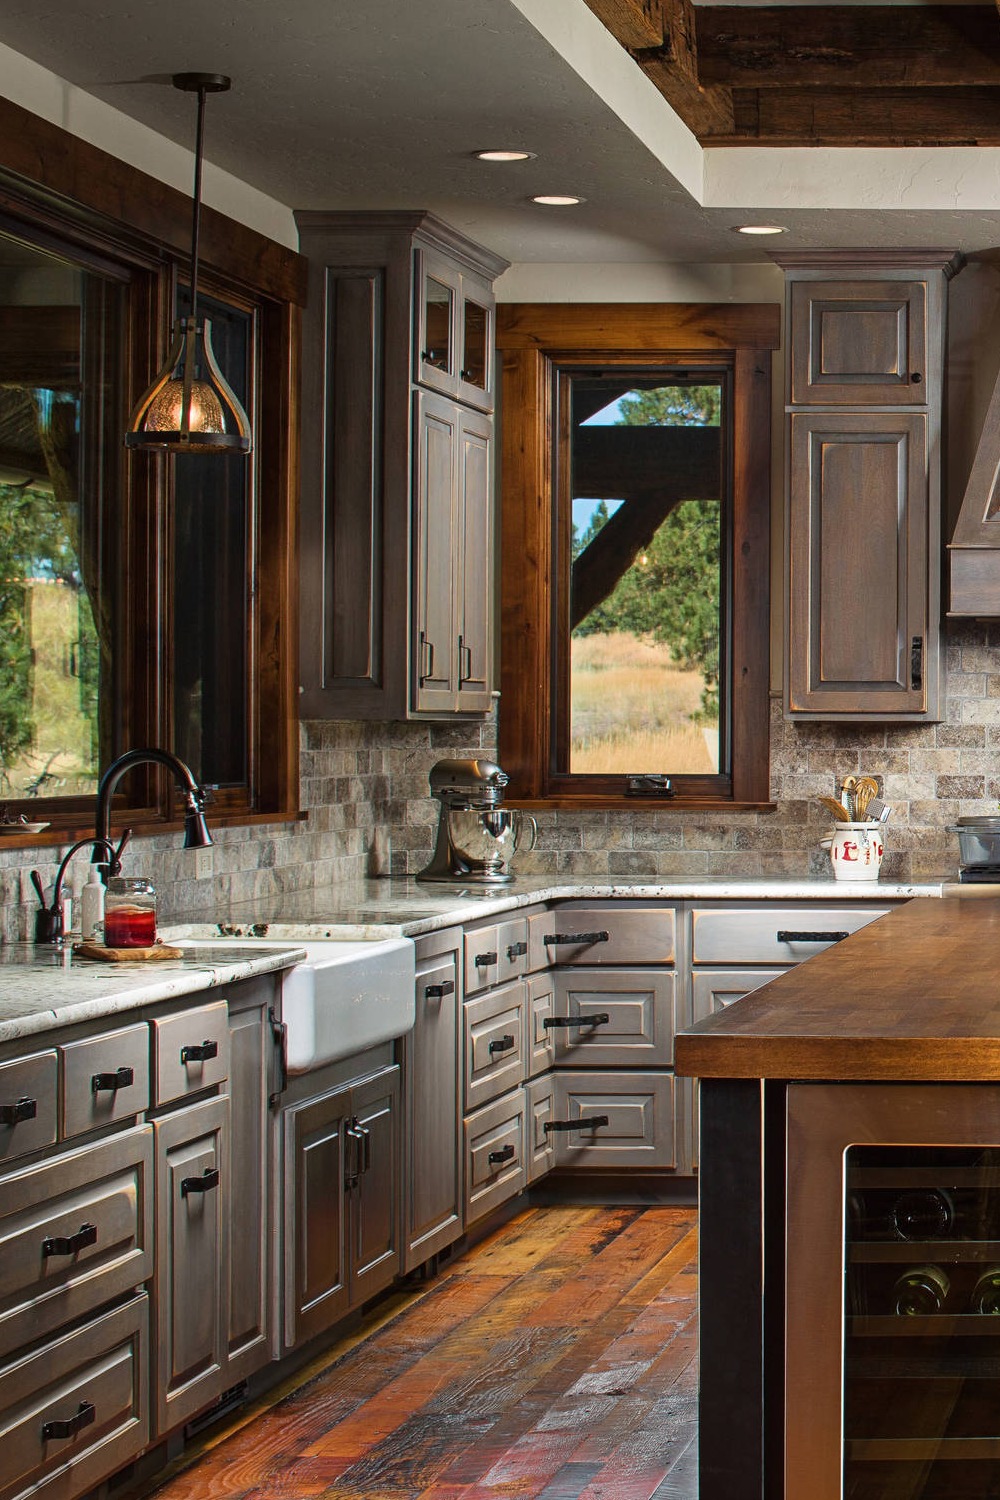 Rustic Kitchens Wood Cabinets Kitchen Ideas Concrete Floor Brown Backsplash